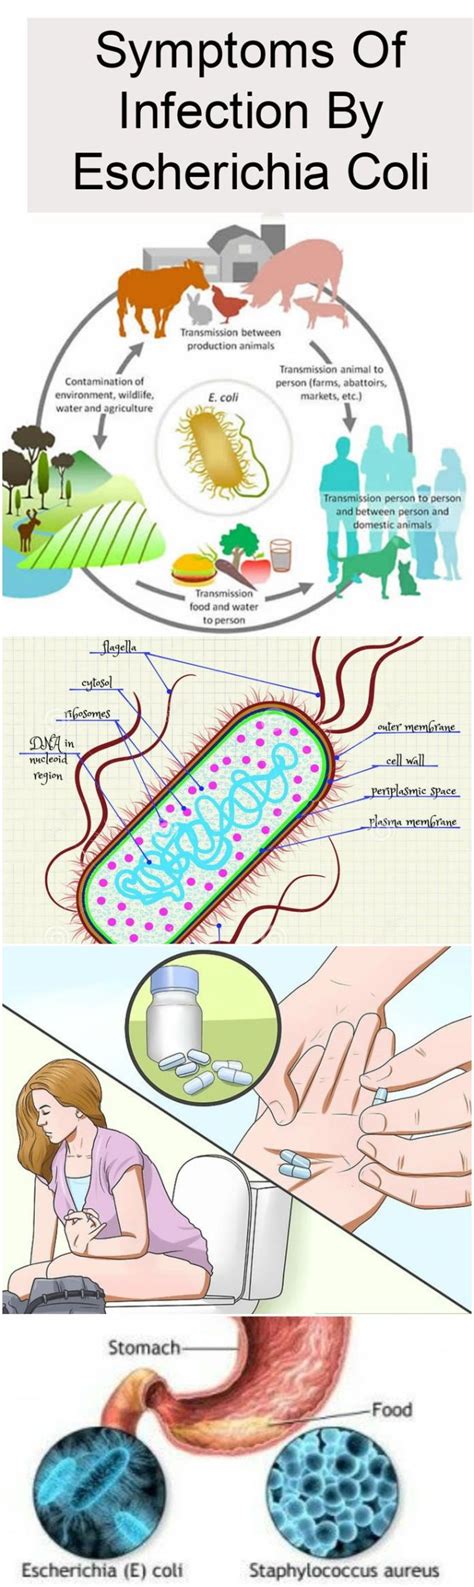 Educational Symptoms Of Infection By Escherichia Coli